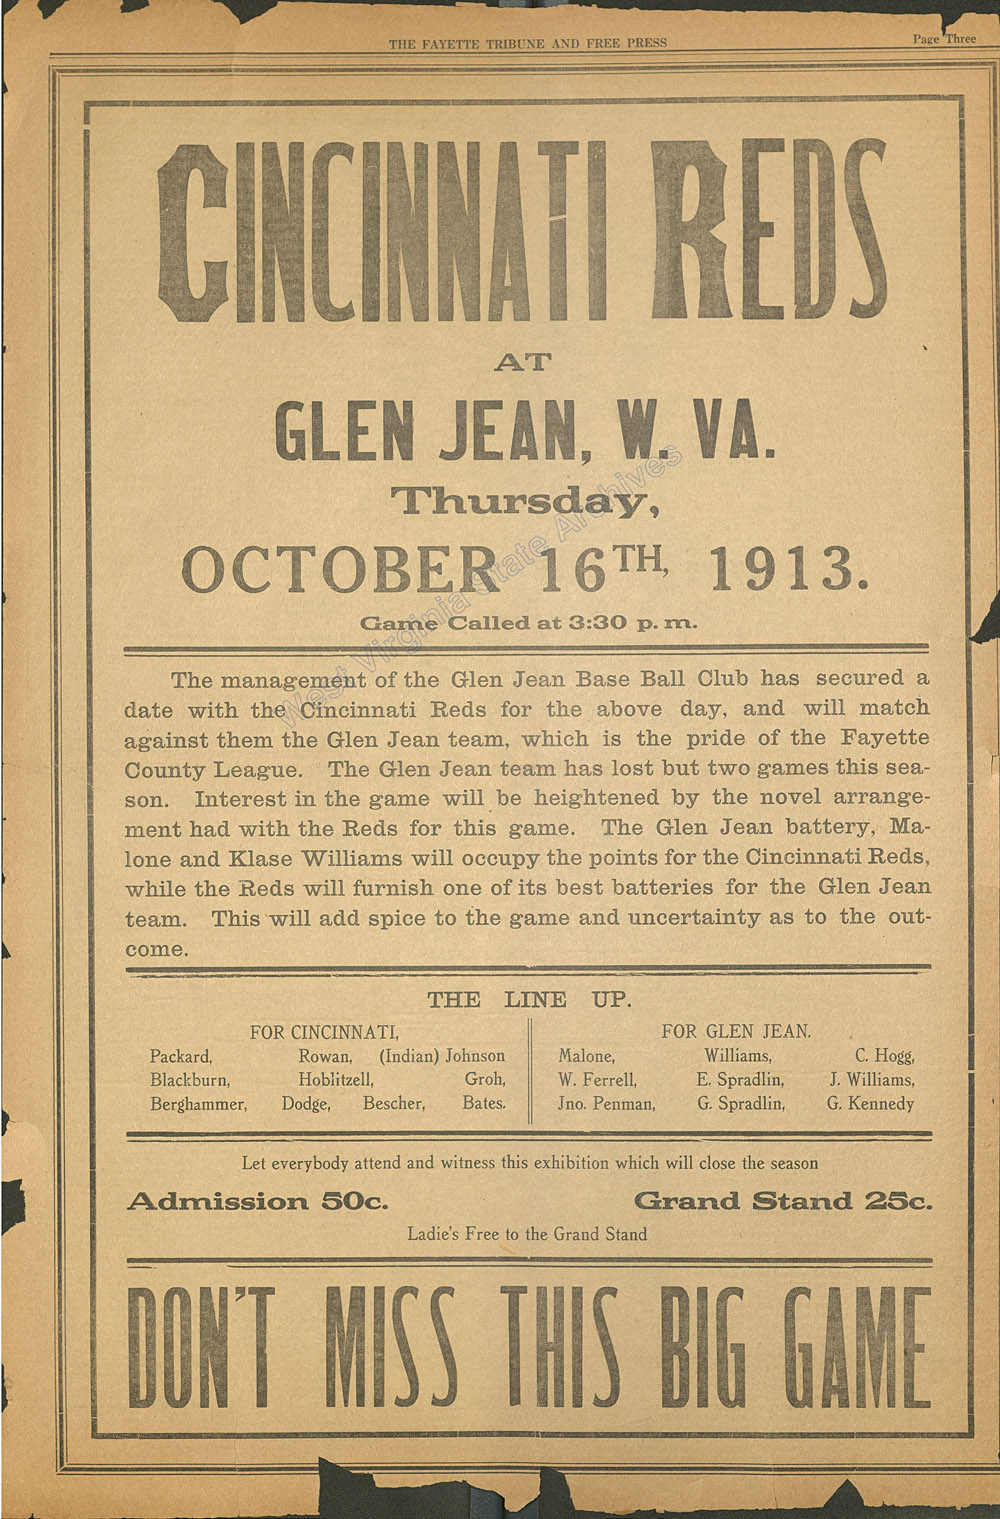 Fayette Tribune advertisement for baseball game featuring Cincinnati Reds at Glen Jean, October 9, 1913. (MN-17)